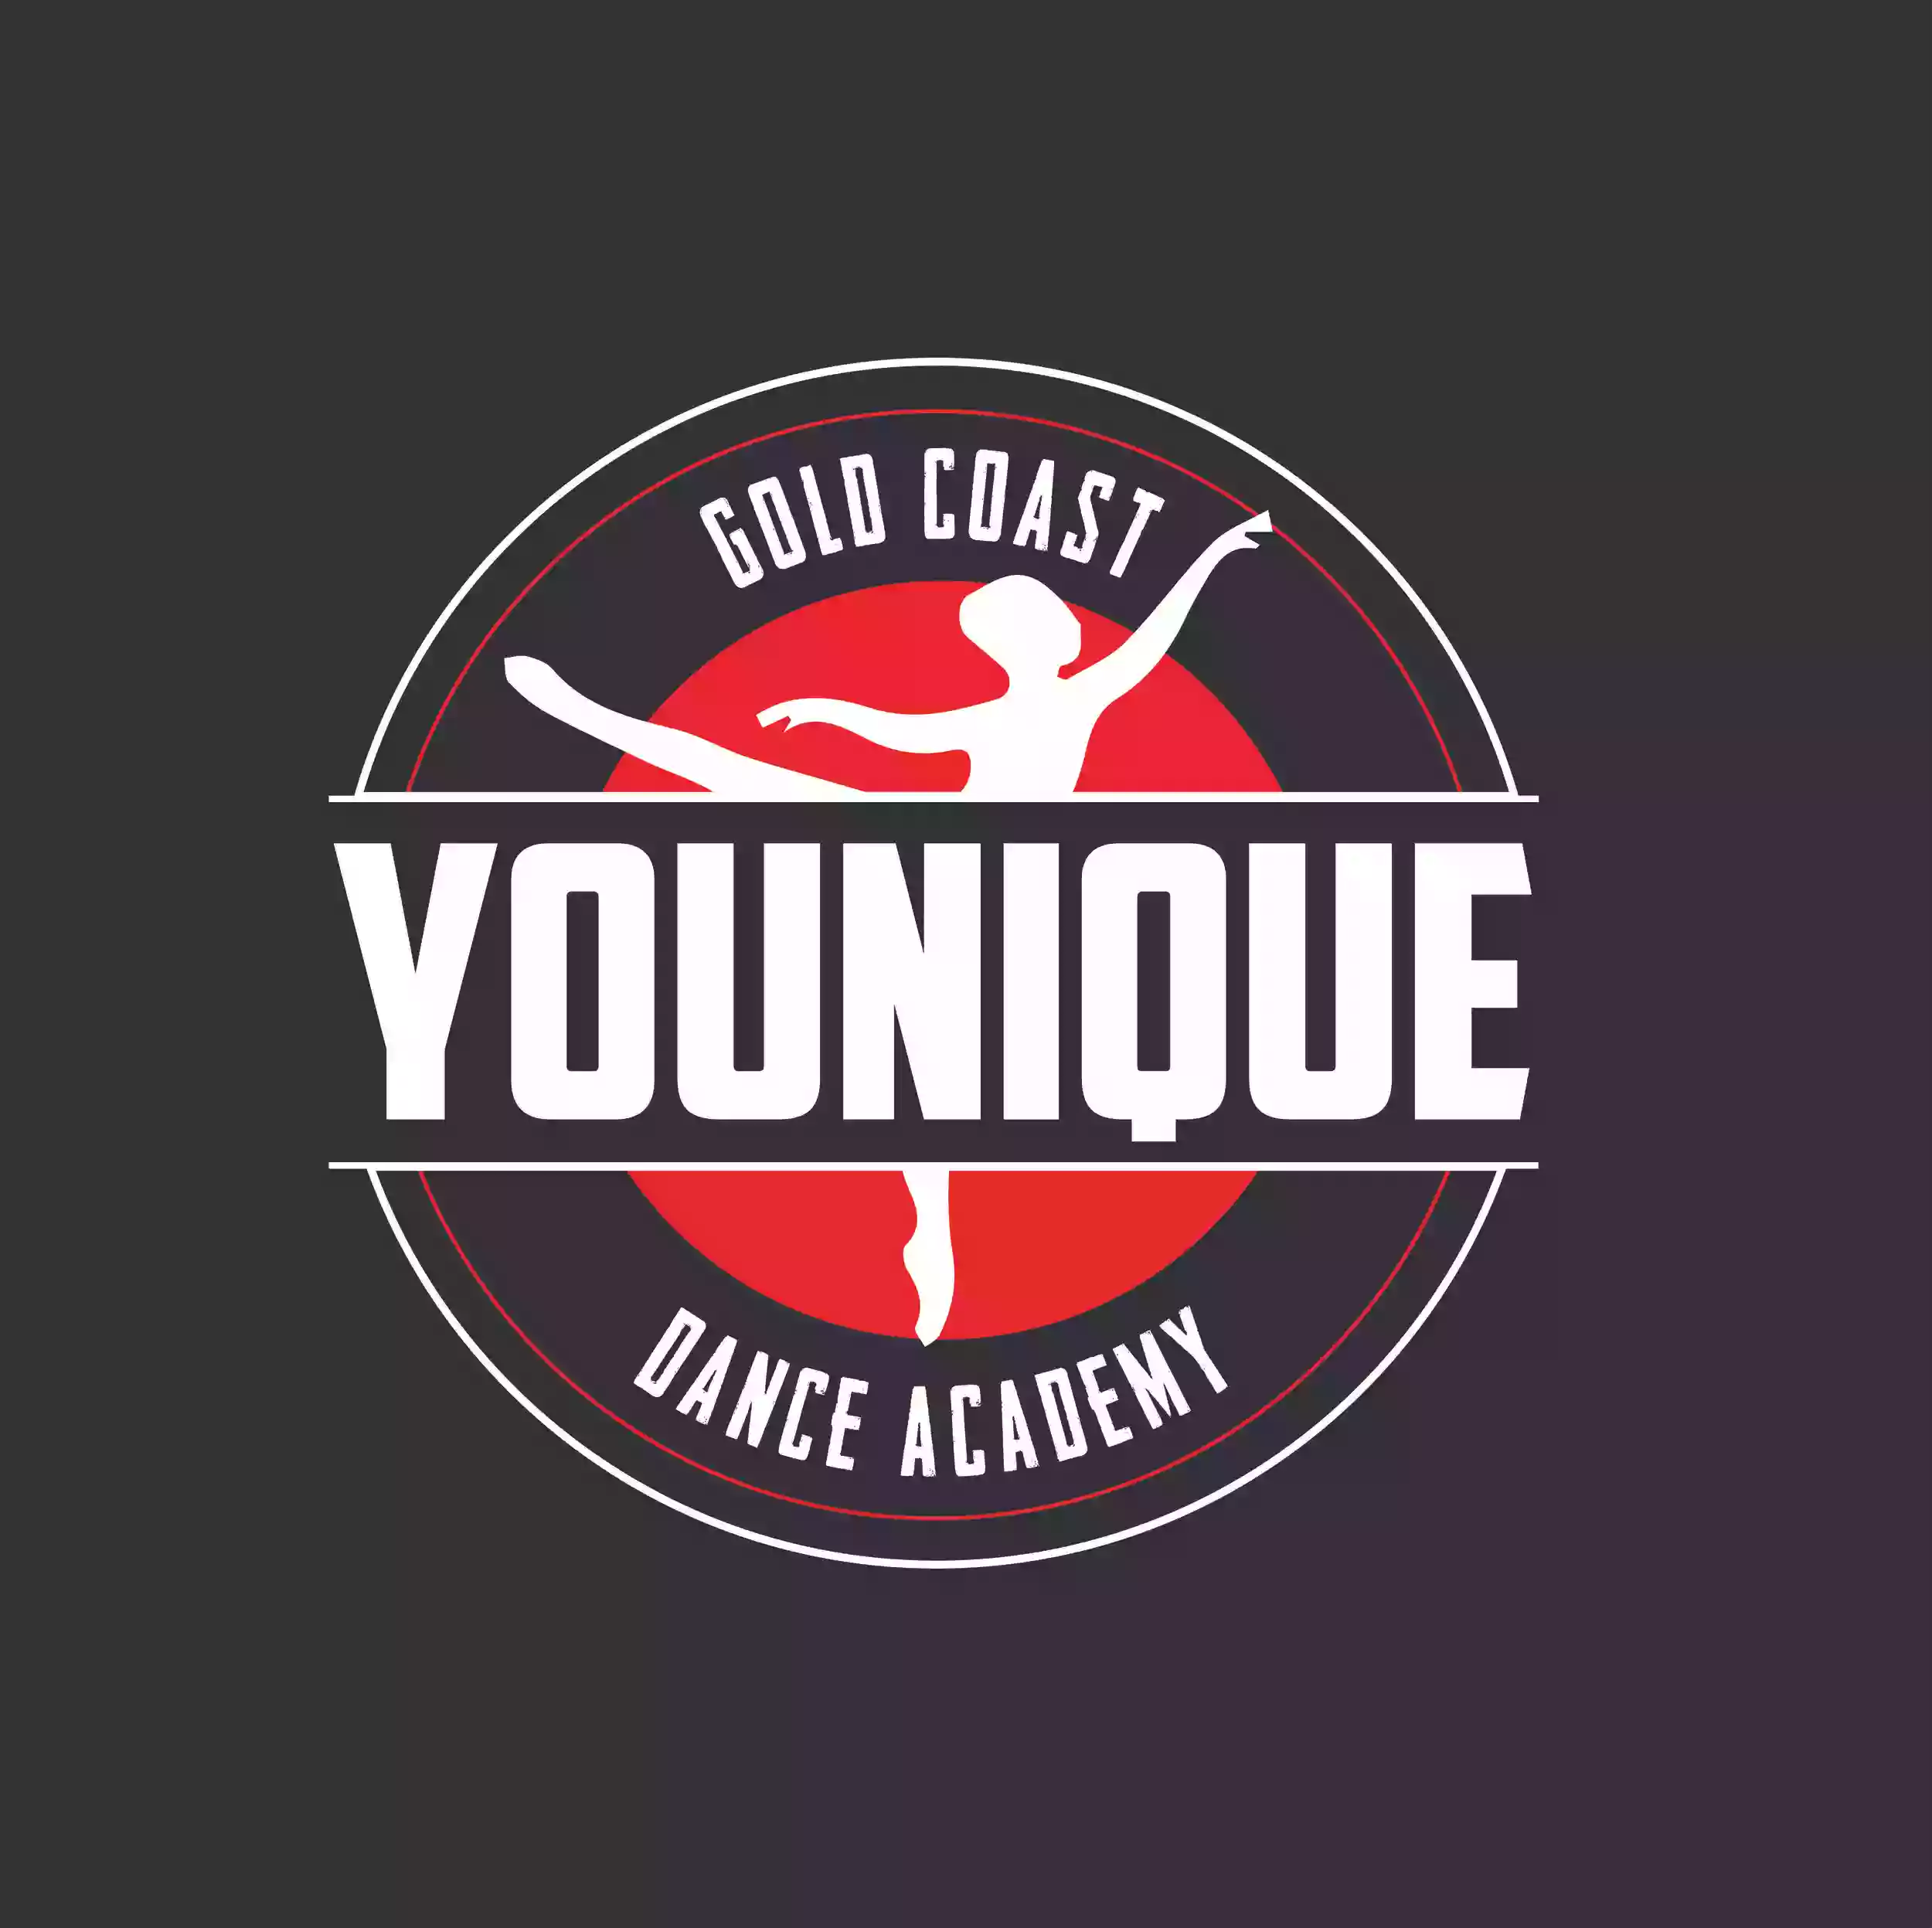 YOUNIQUE Dance Academy